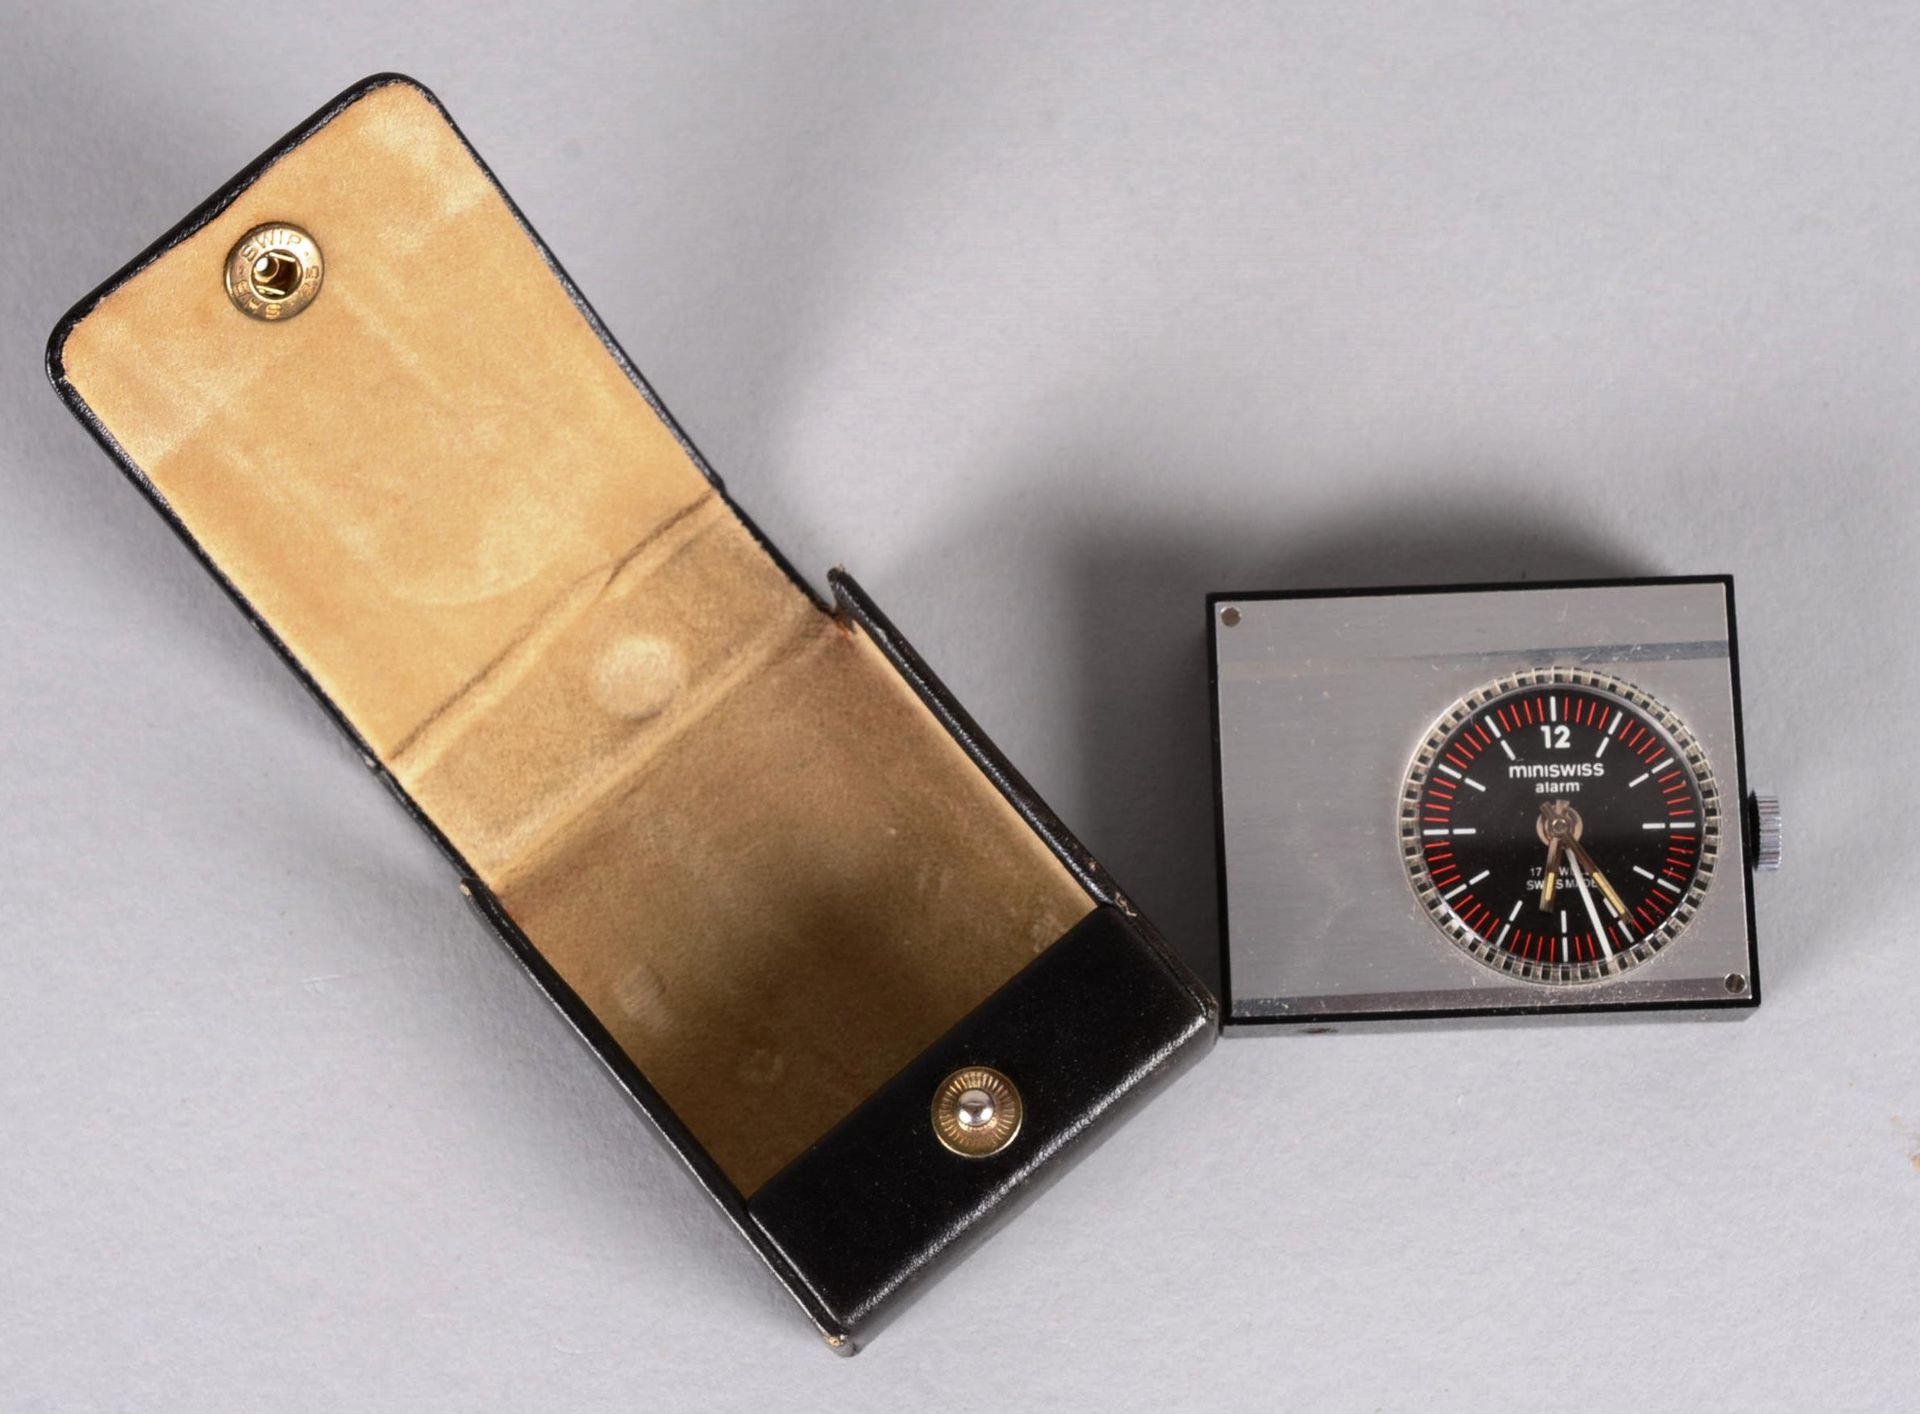 Réveil Miniswiss 古董MINISWISS闹钟旅行闹钟，17颗宝石，瑞士制造，带皮套，电池驱动，未检查。

总尺寸：5,50 x 4,50厘米